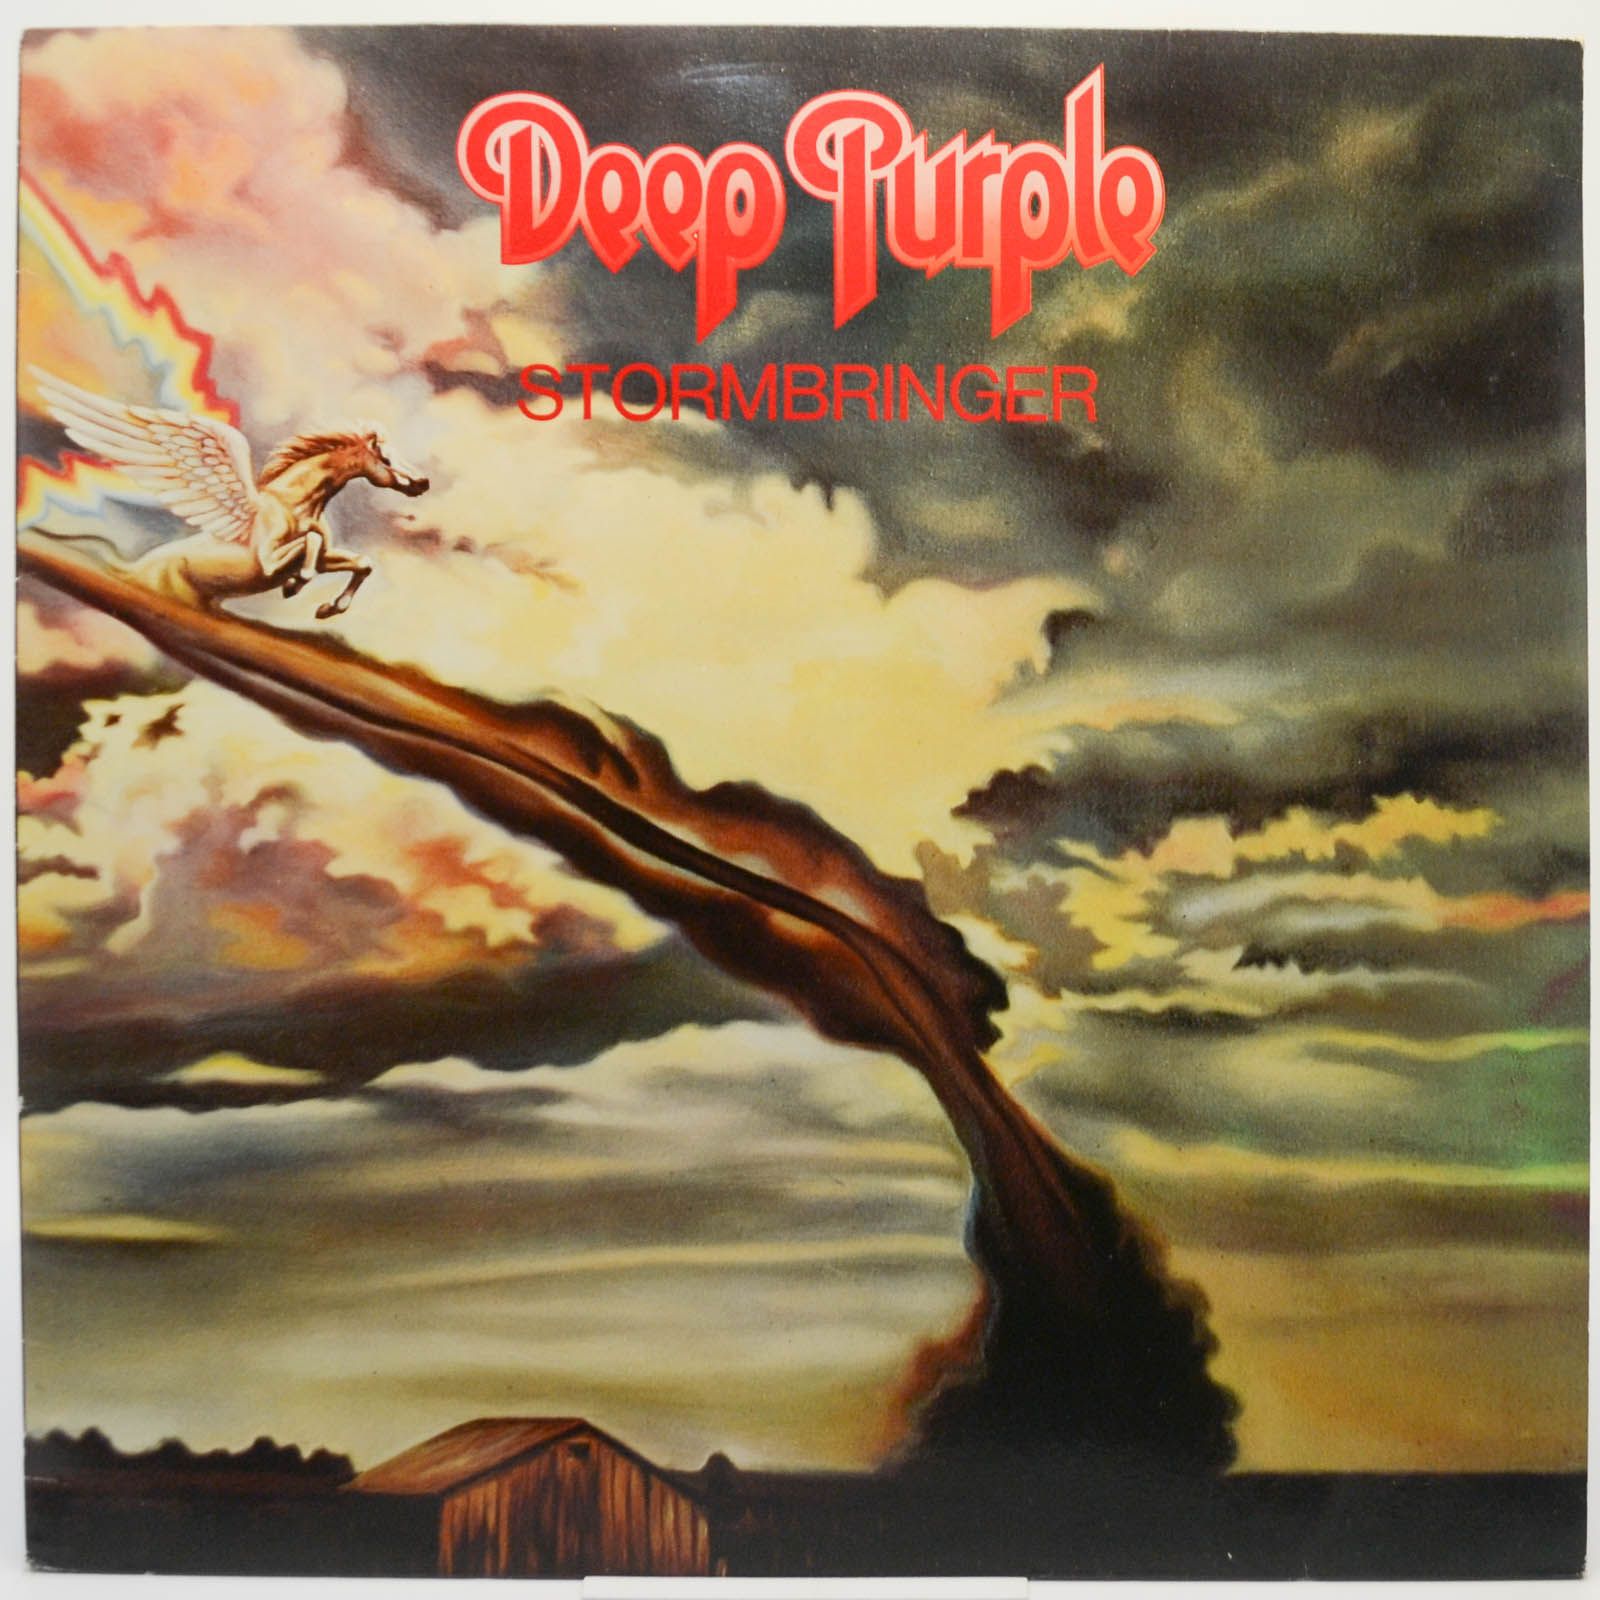 Deep Purple — Stormbringer, 1974